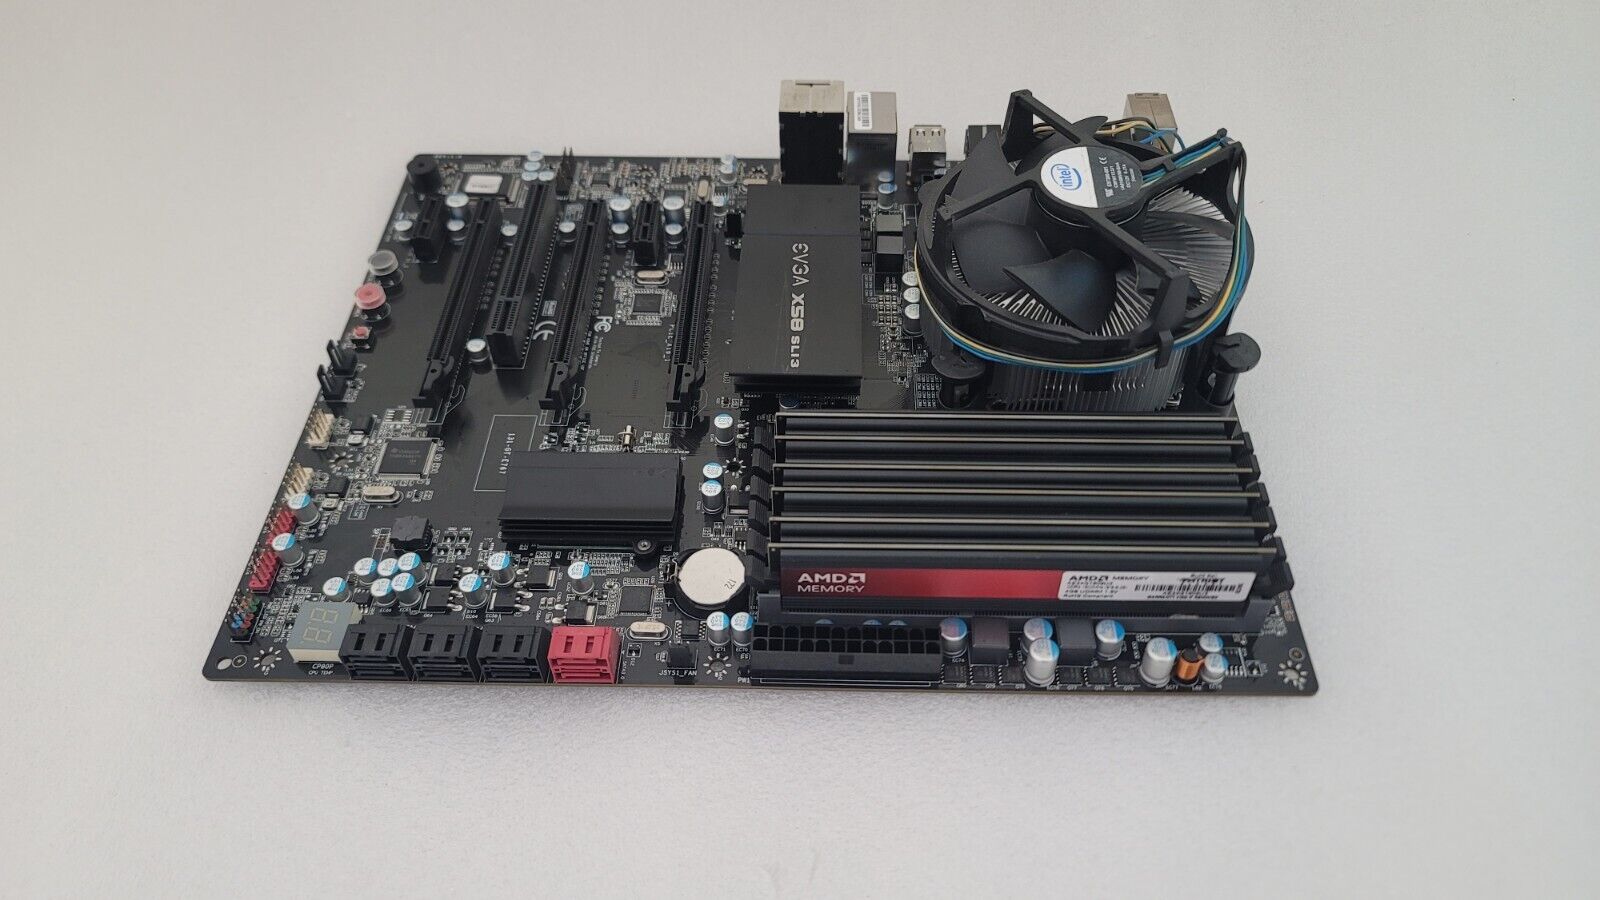 EVGA X58 SLI3 Motherboard P/N 131-GT-E767 with Intel Core i7-960 + 24GB Memory